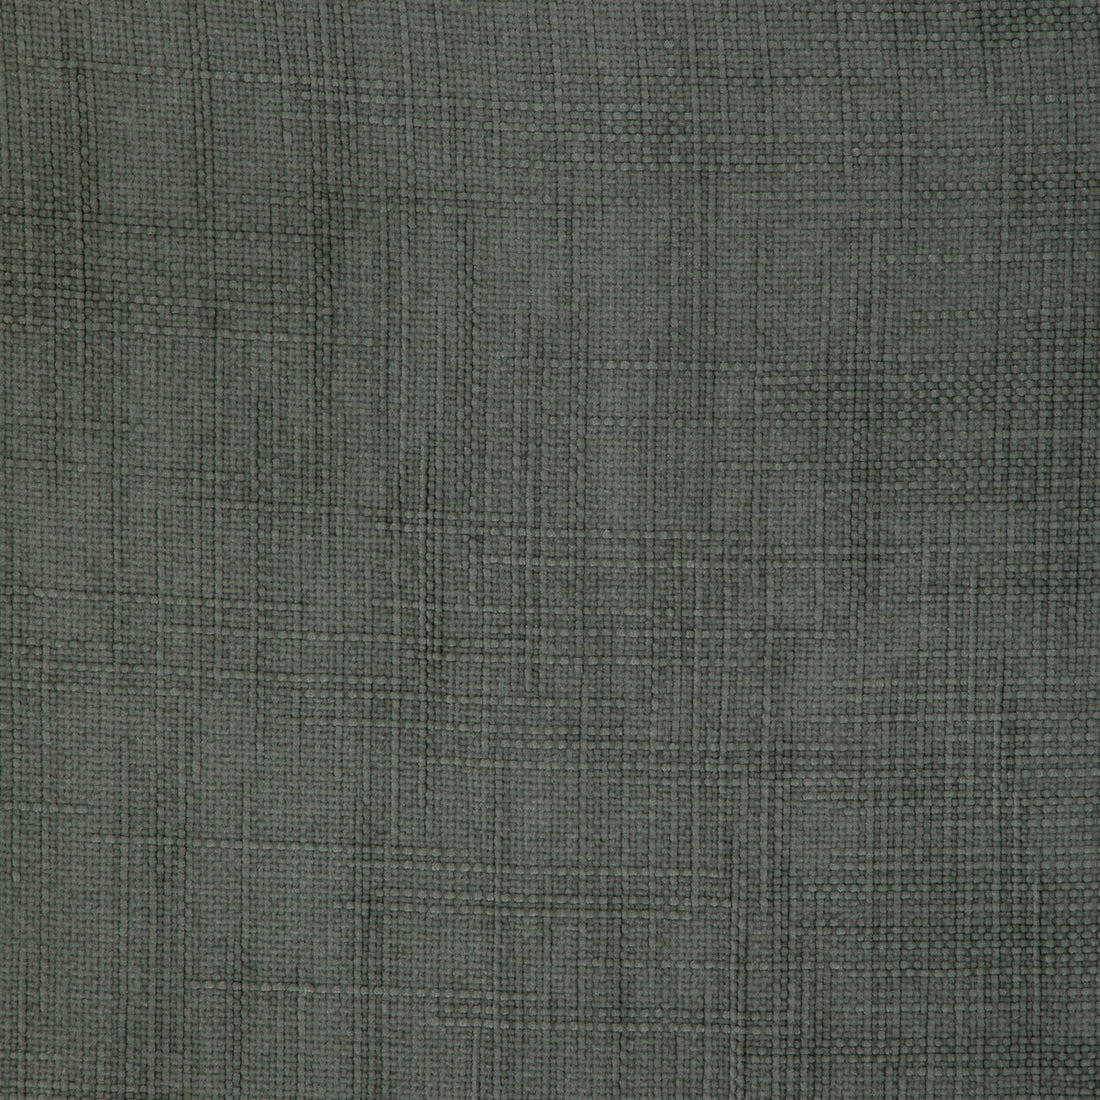 Kravet Smart fabric in 36991-303 color - pattern 36991.303.0 - by Kravet Smart in the Performance Kravetarmor collection